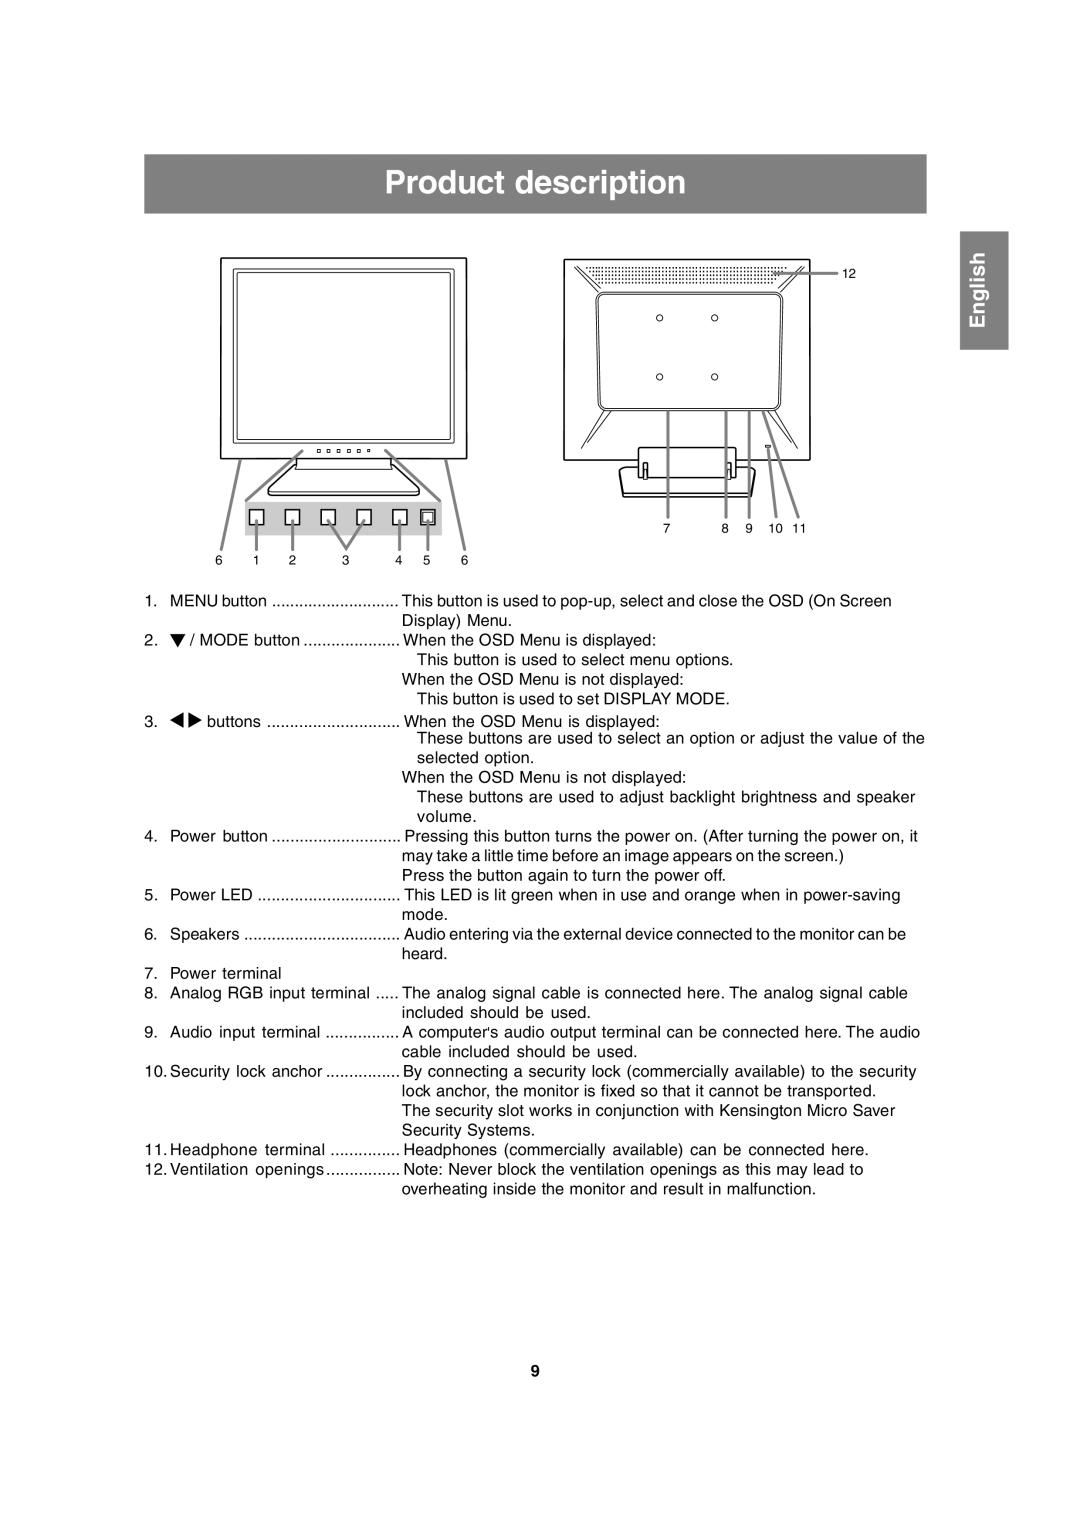 Sharp LL-T15A4 operation manual Product description, English, Power LED, Audio input terminal 